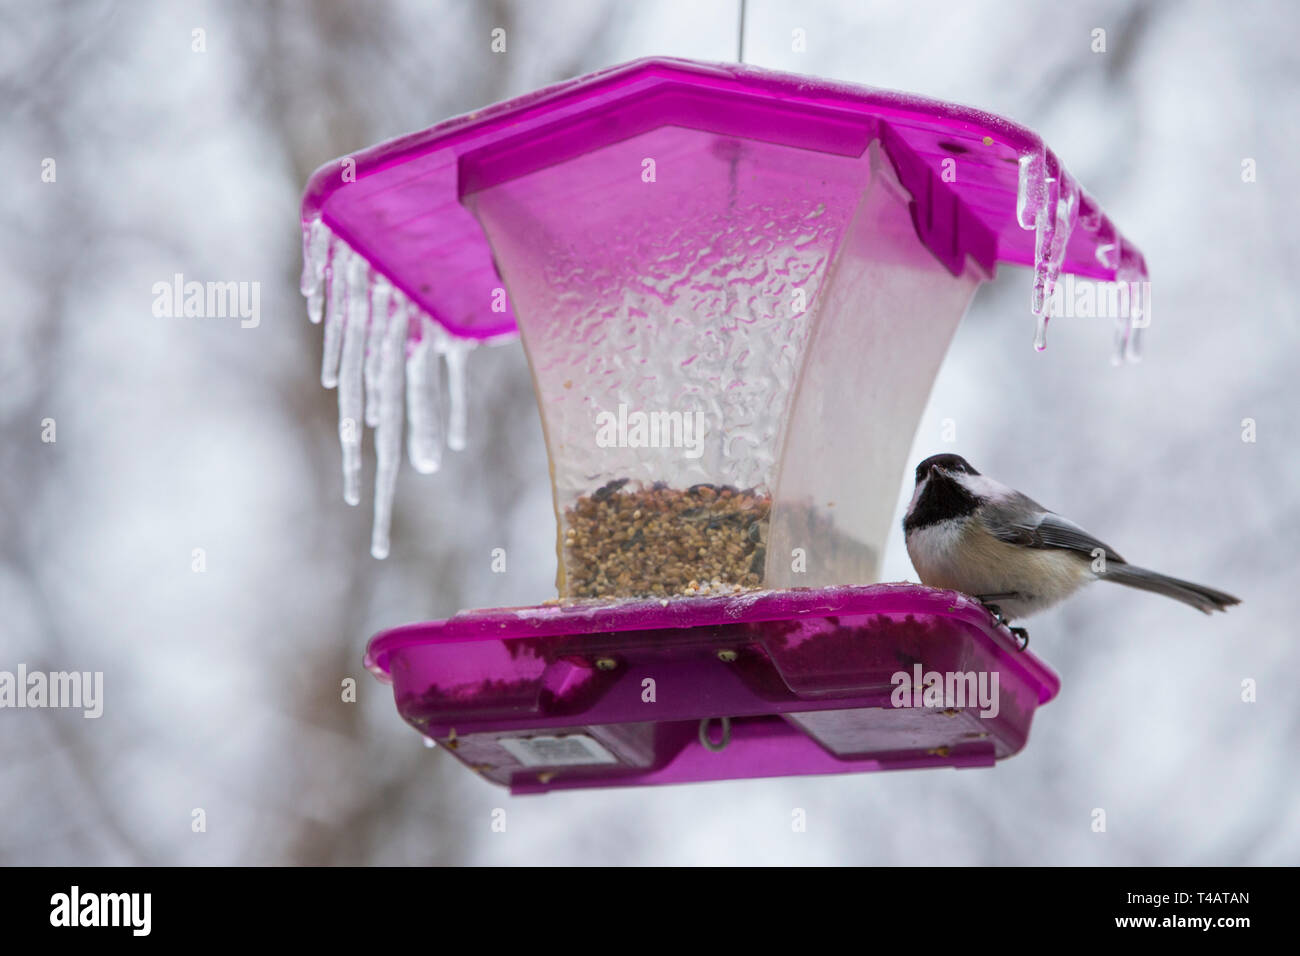 Birds at feeder in freezing rain Stock Photo